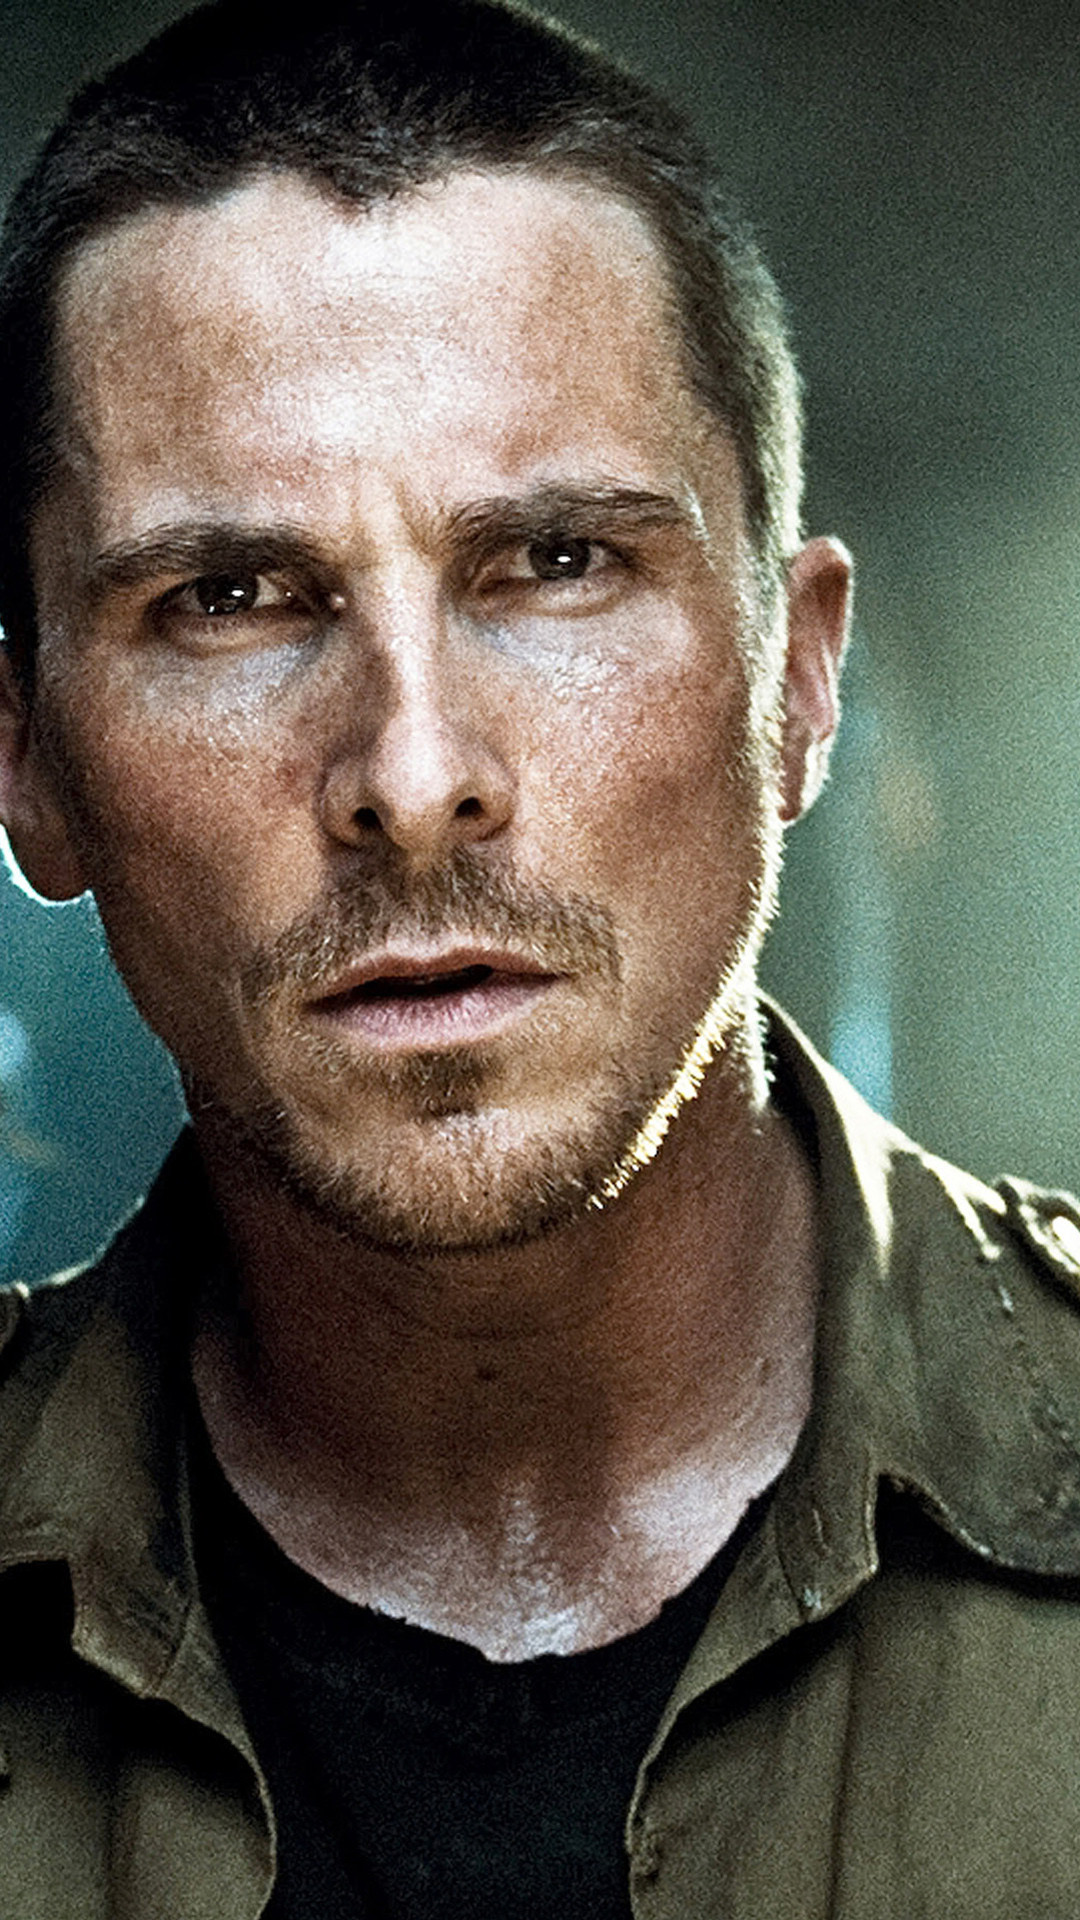 1080x1920 Terminator Salvation Christian Bale Htc One M8 wallpaper